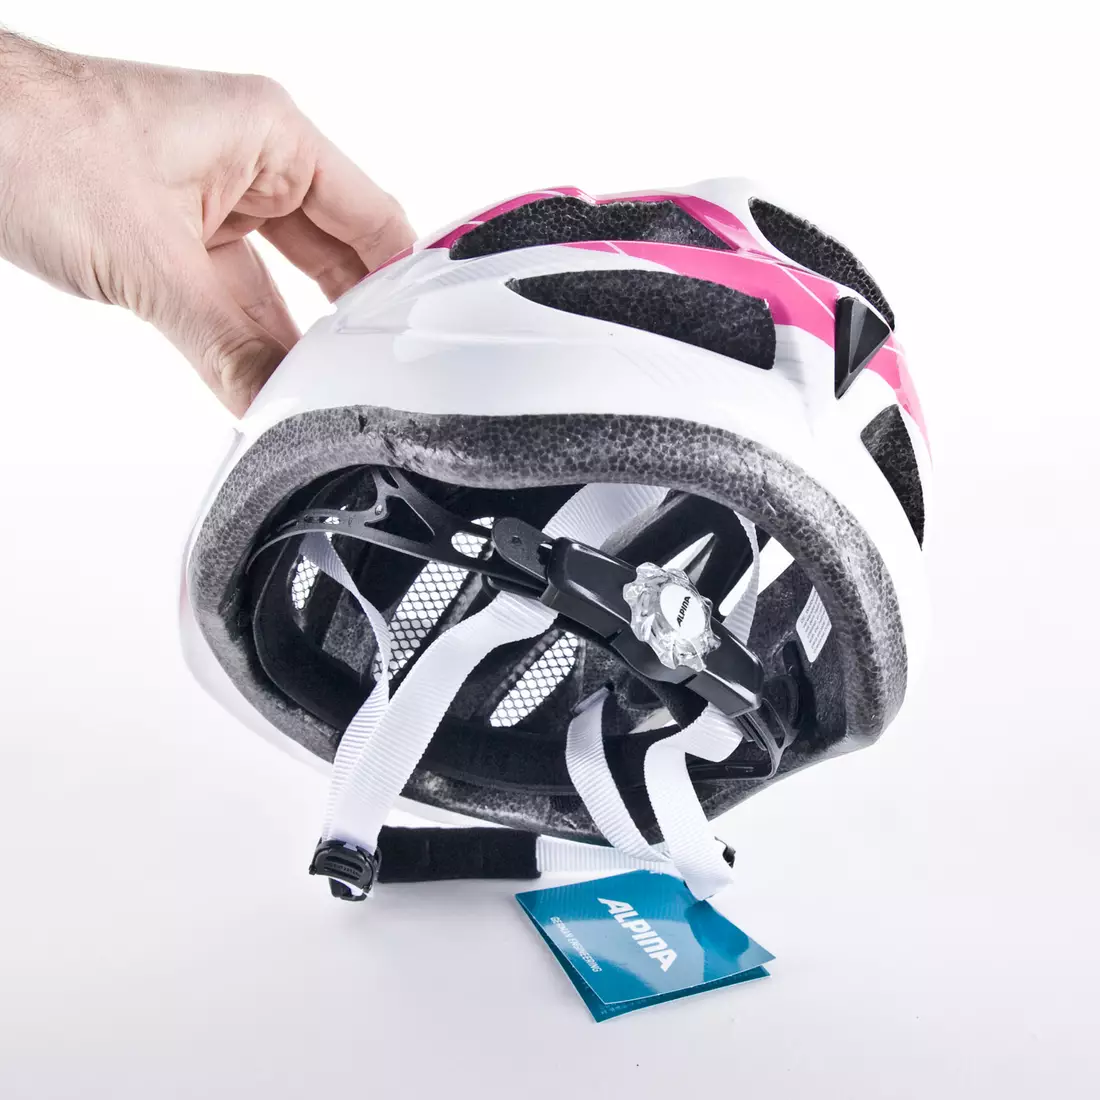 ALPINA bicycle helmet MTB17, white and pink